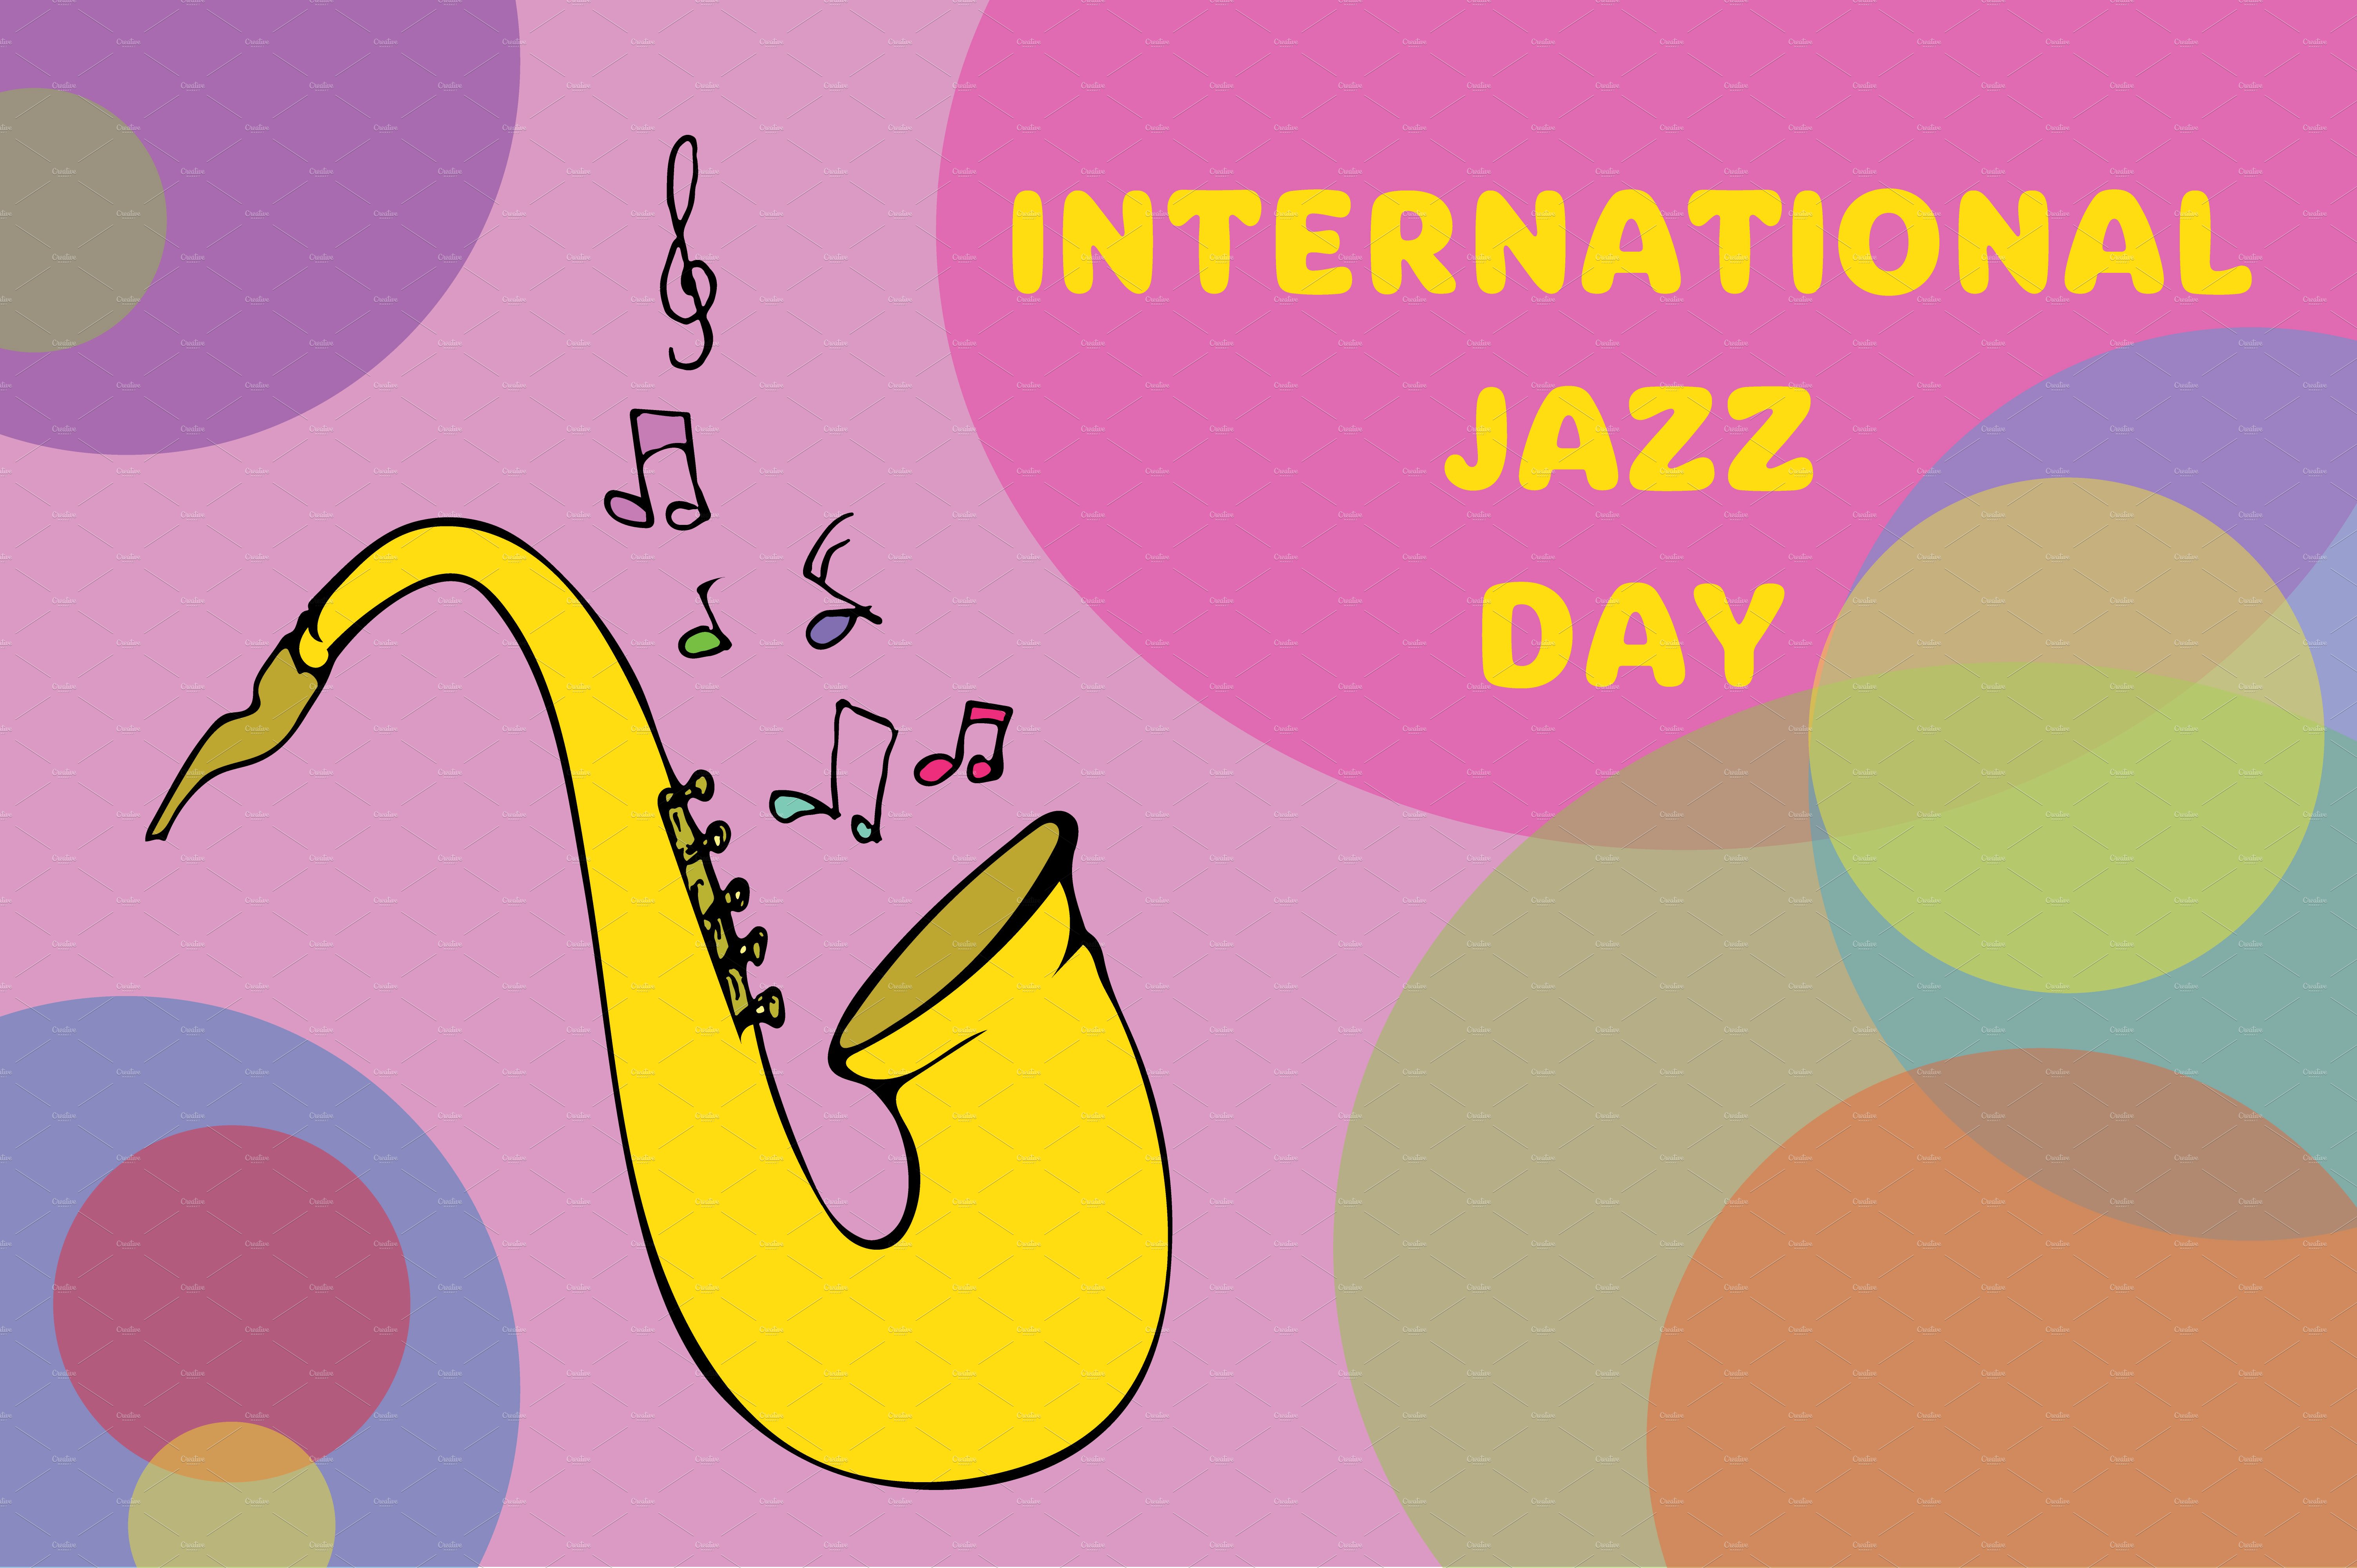 International jazz day cover image.